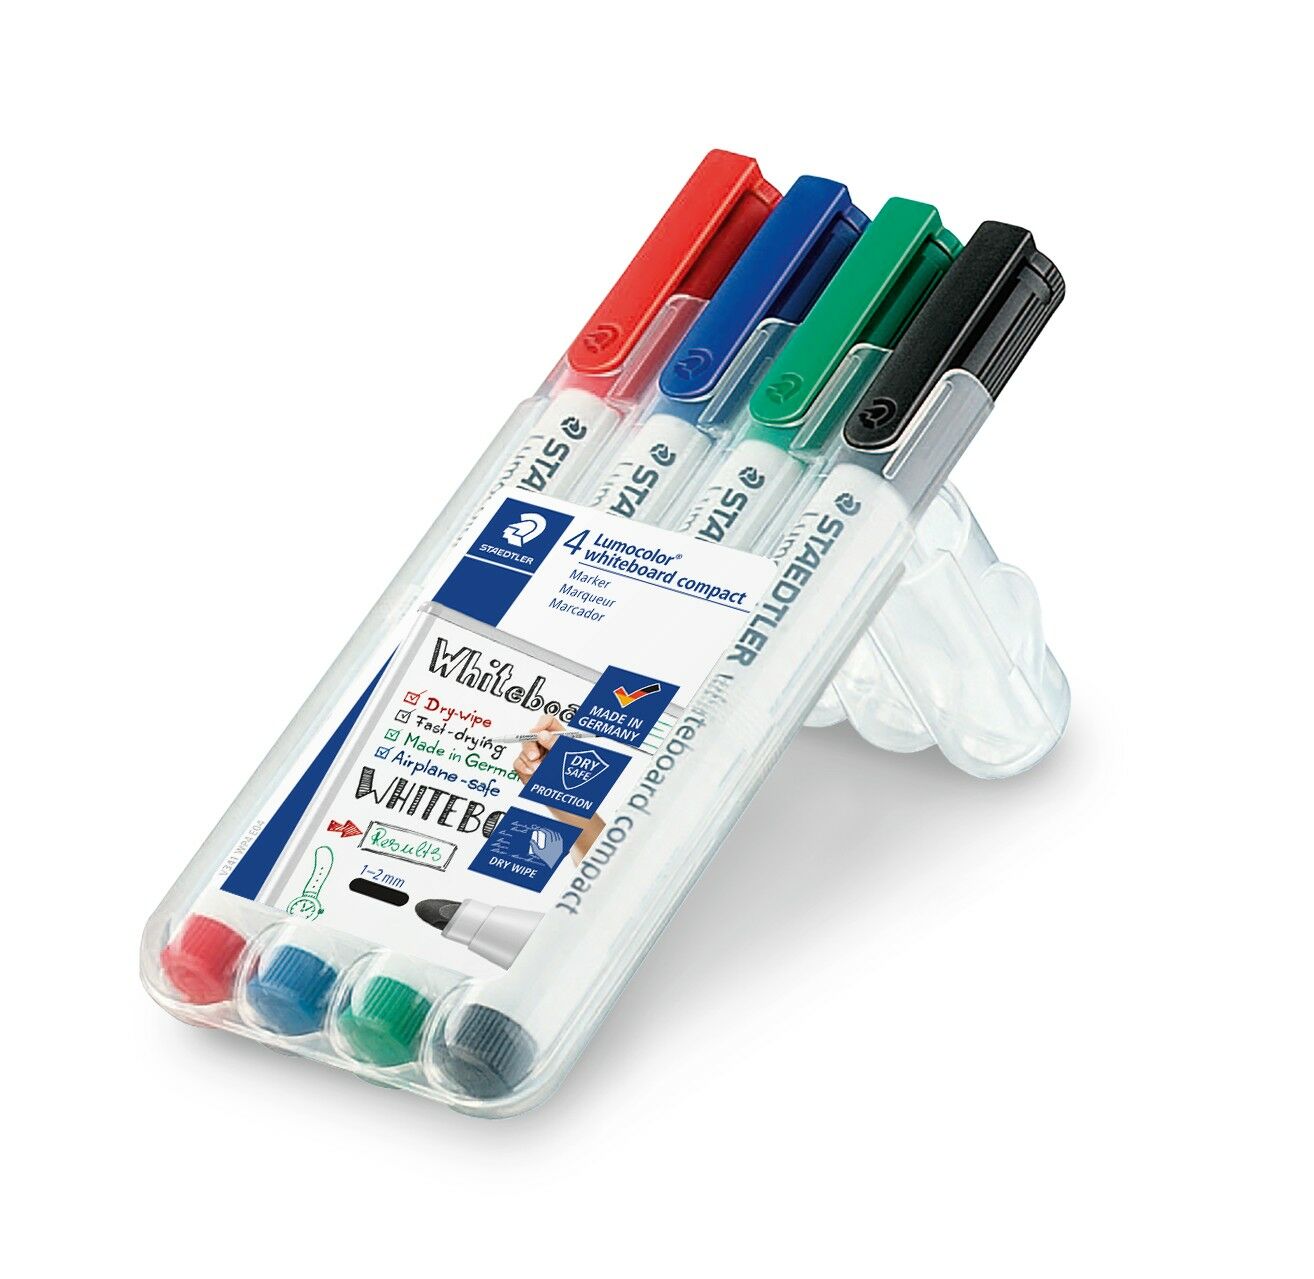 Lumocolor® whiteboard compact 341 - Handy-sized whiteboard marker